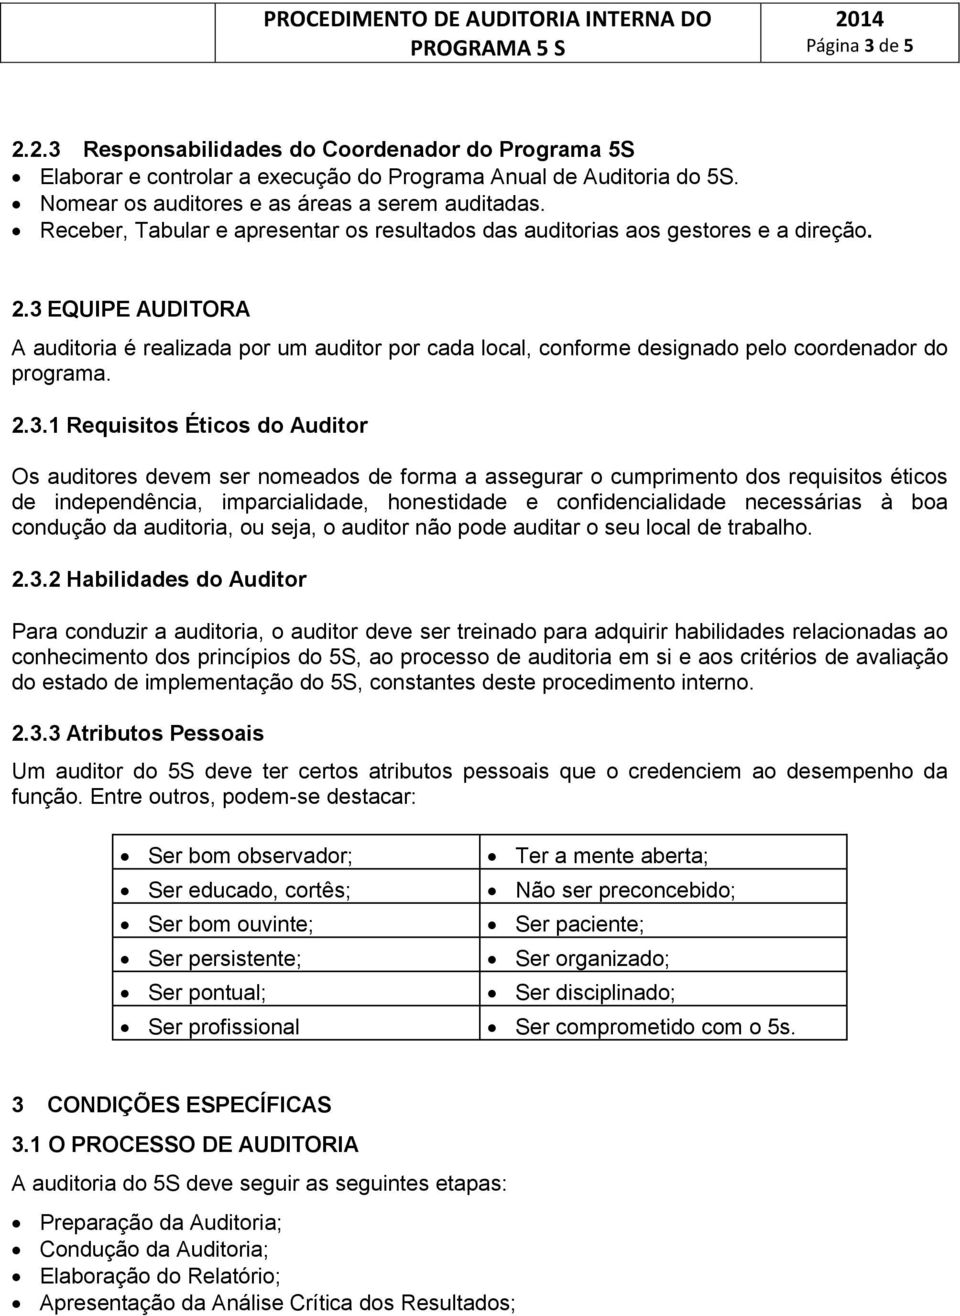 Exemplo De Relatorio De Auditoria Interna